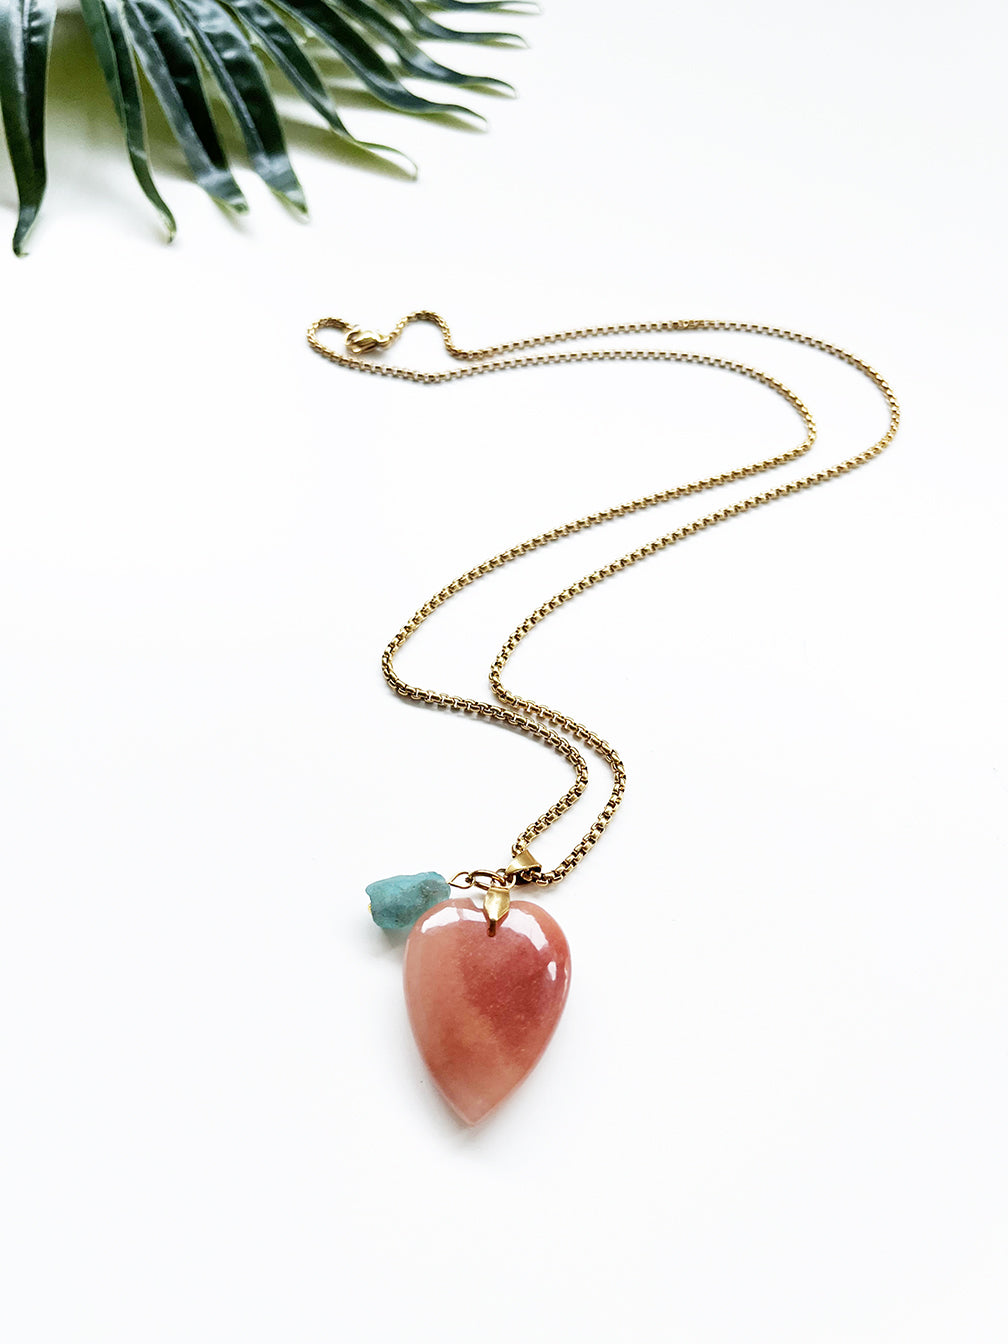 touchstone necklace - peach aventurine and blue apatite